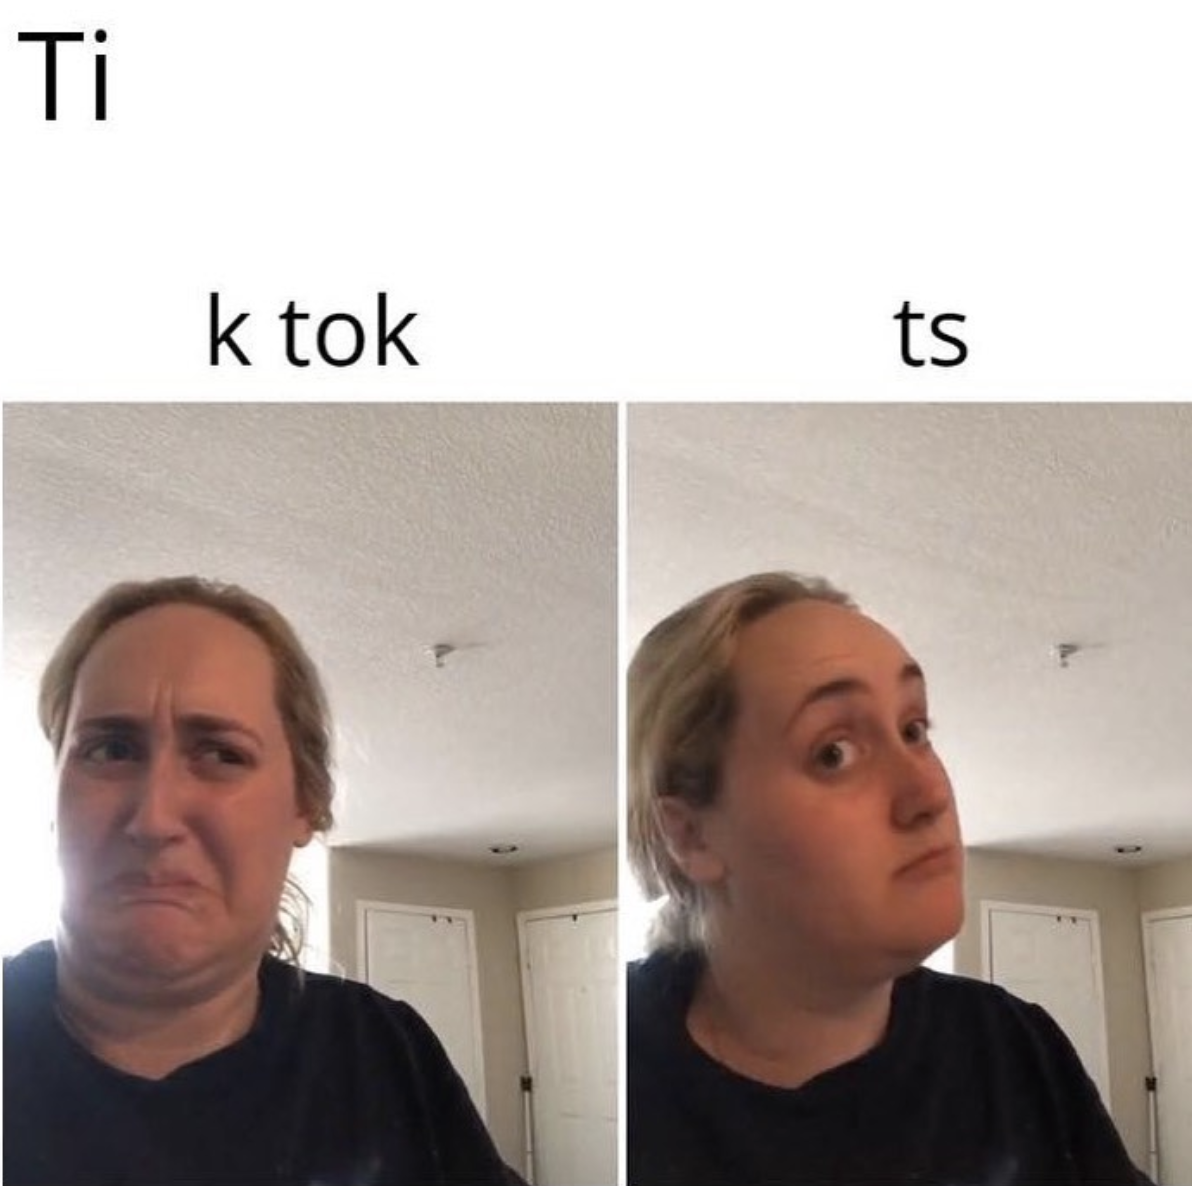 sex memes - Kombucha Girl meme about tiktok and tits